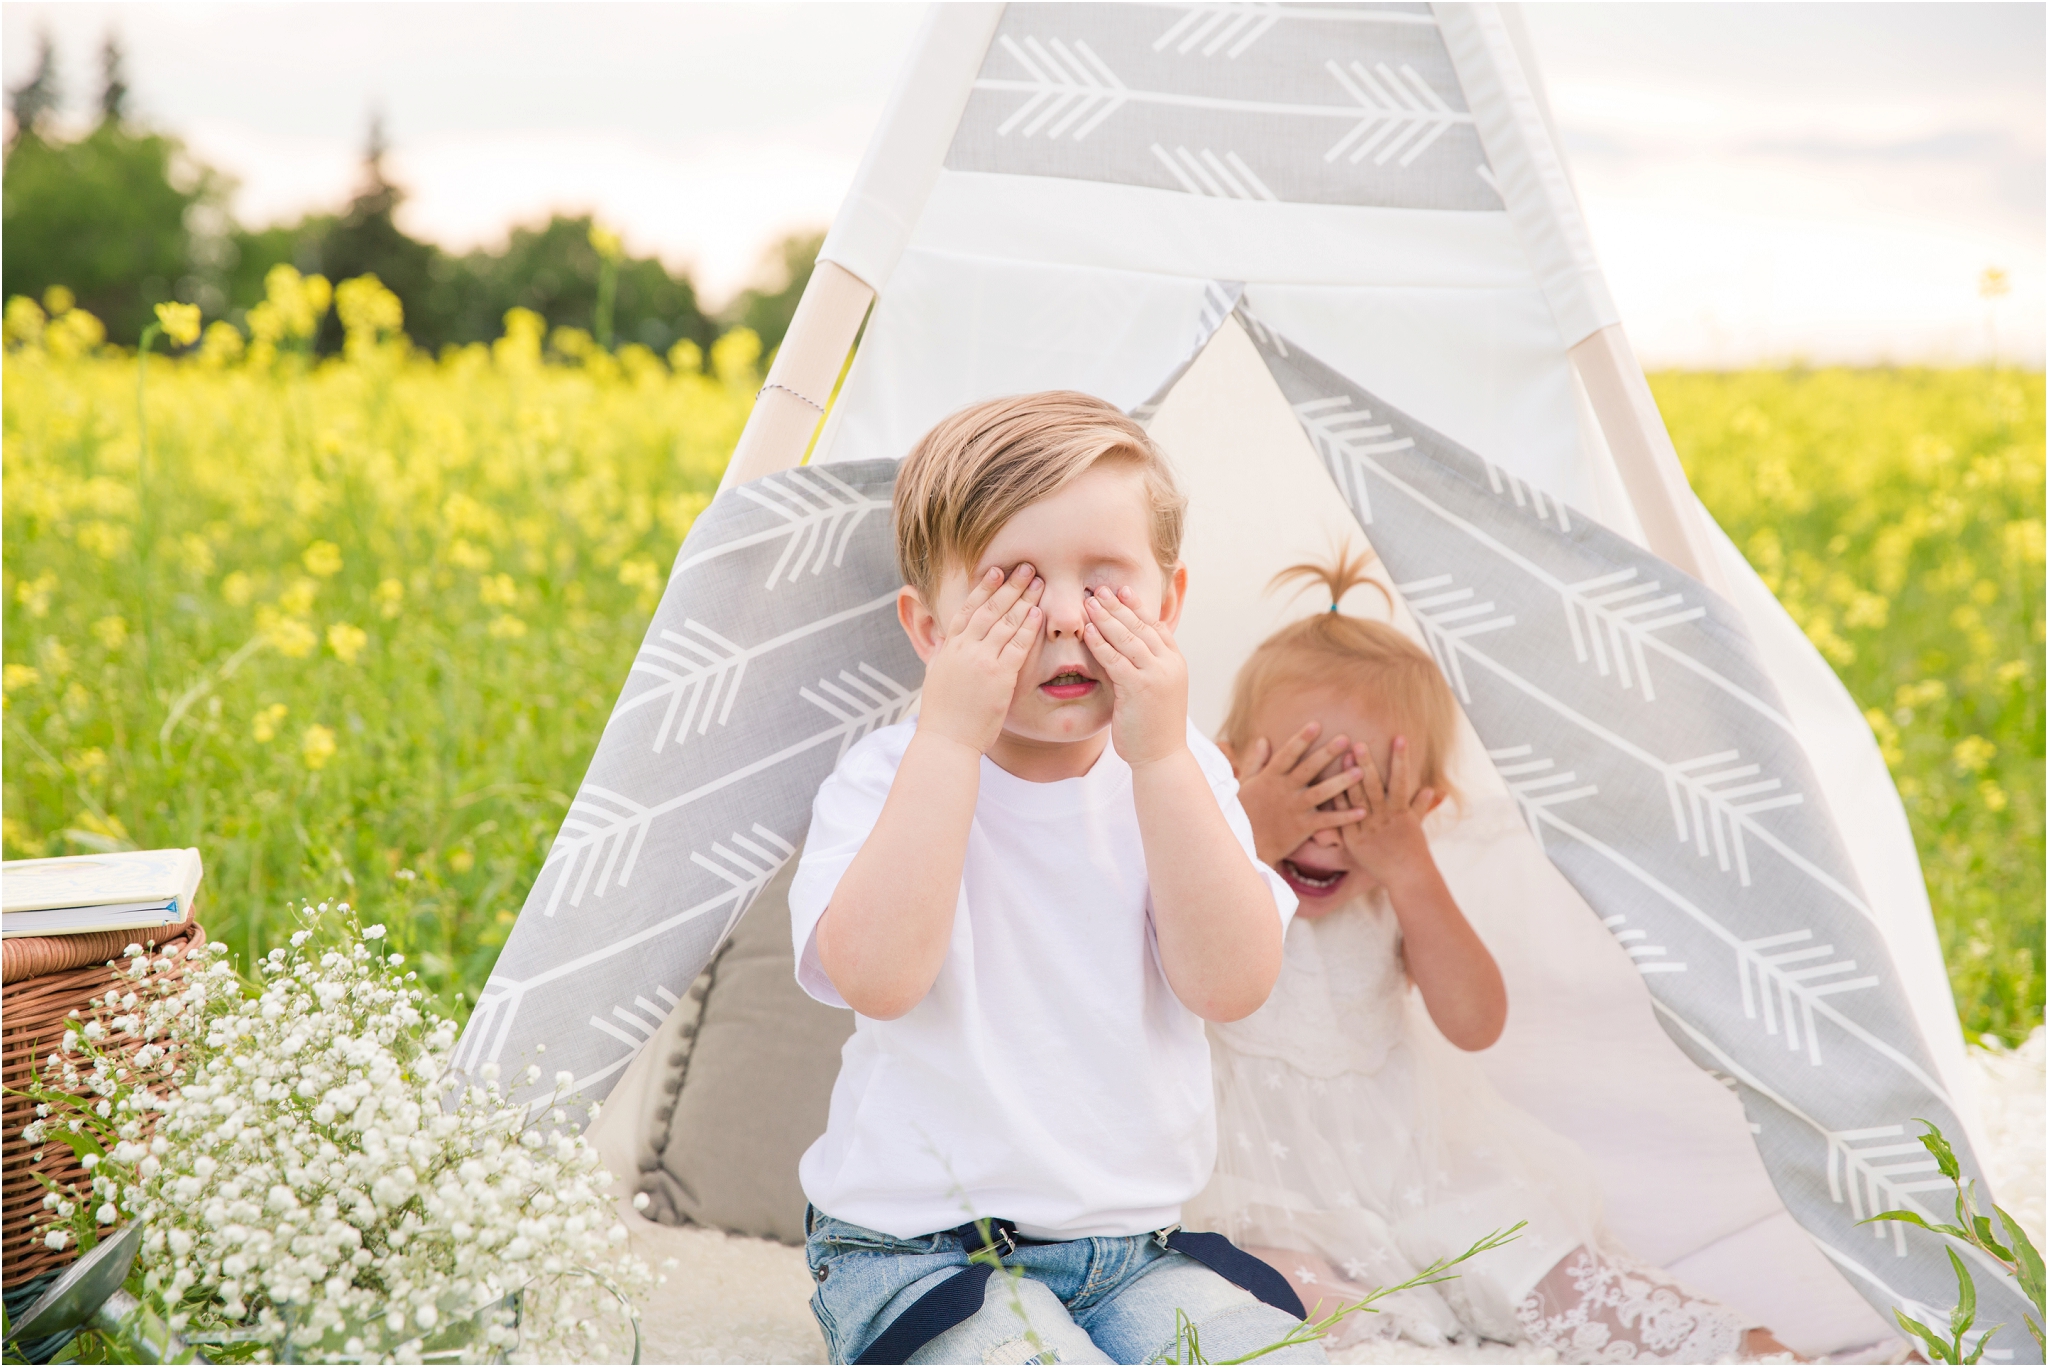 edmonton family photographer style childrens photoshoot canola field teepee